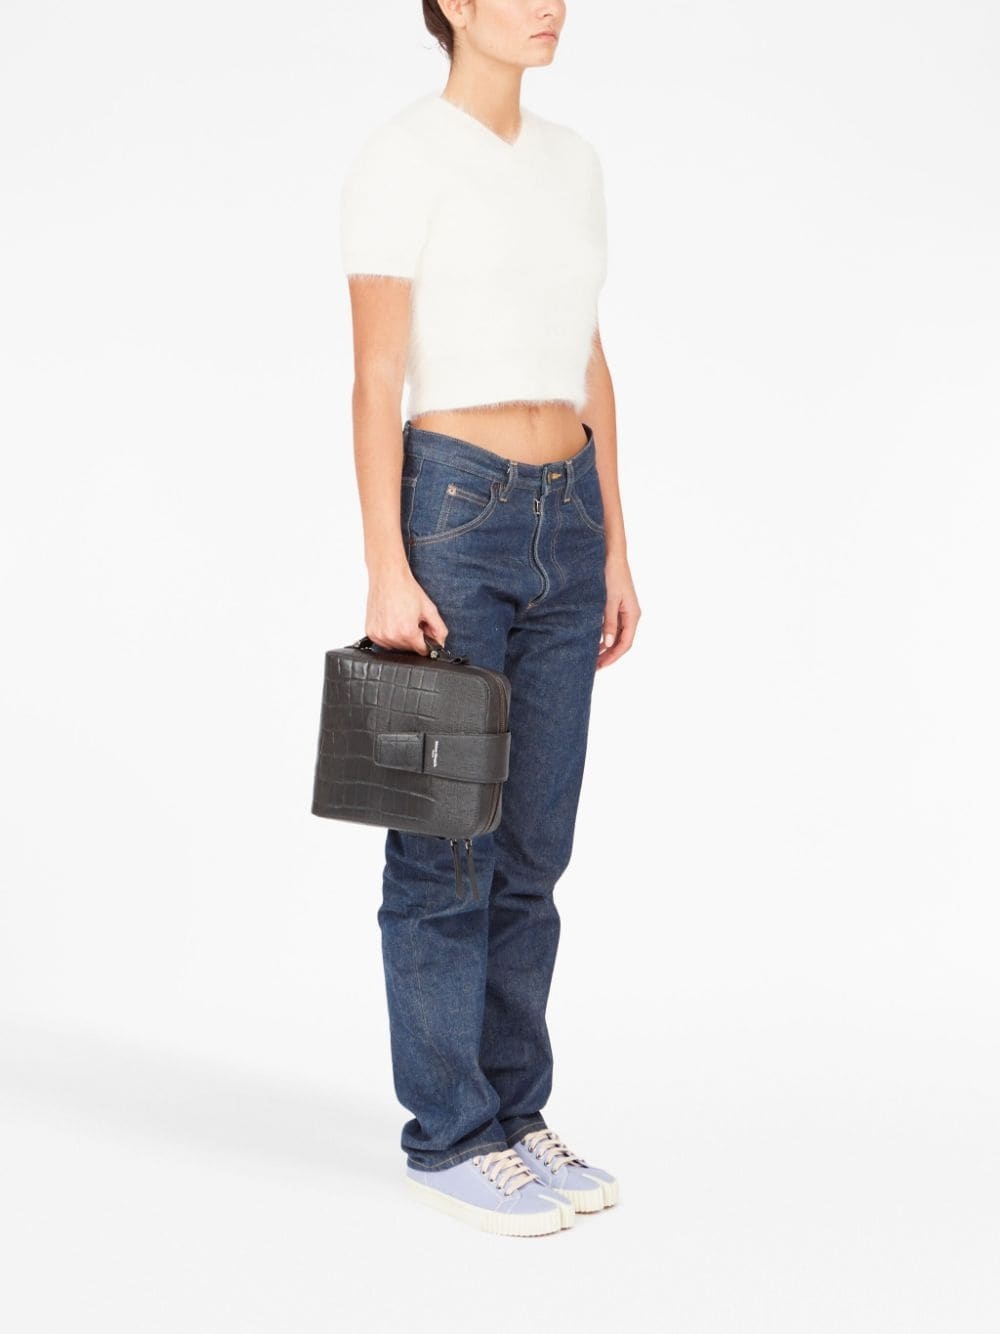 four-stitch leather shoulder bag - 3